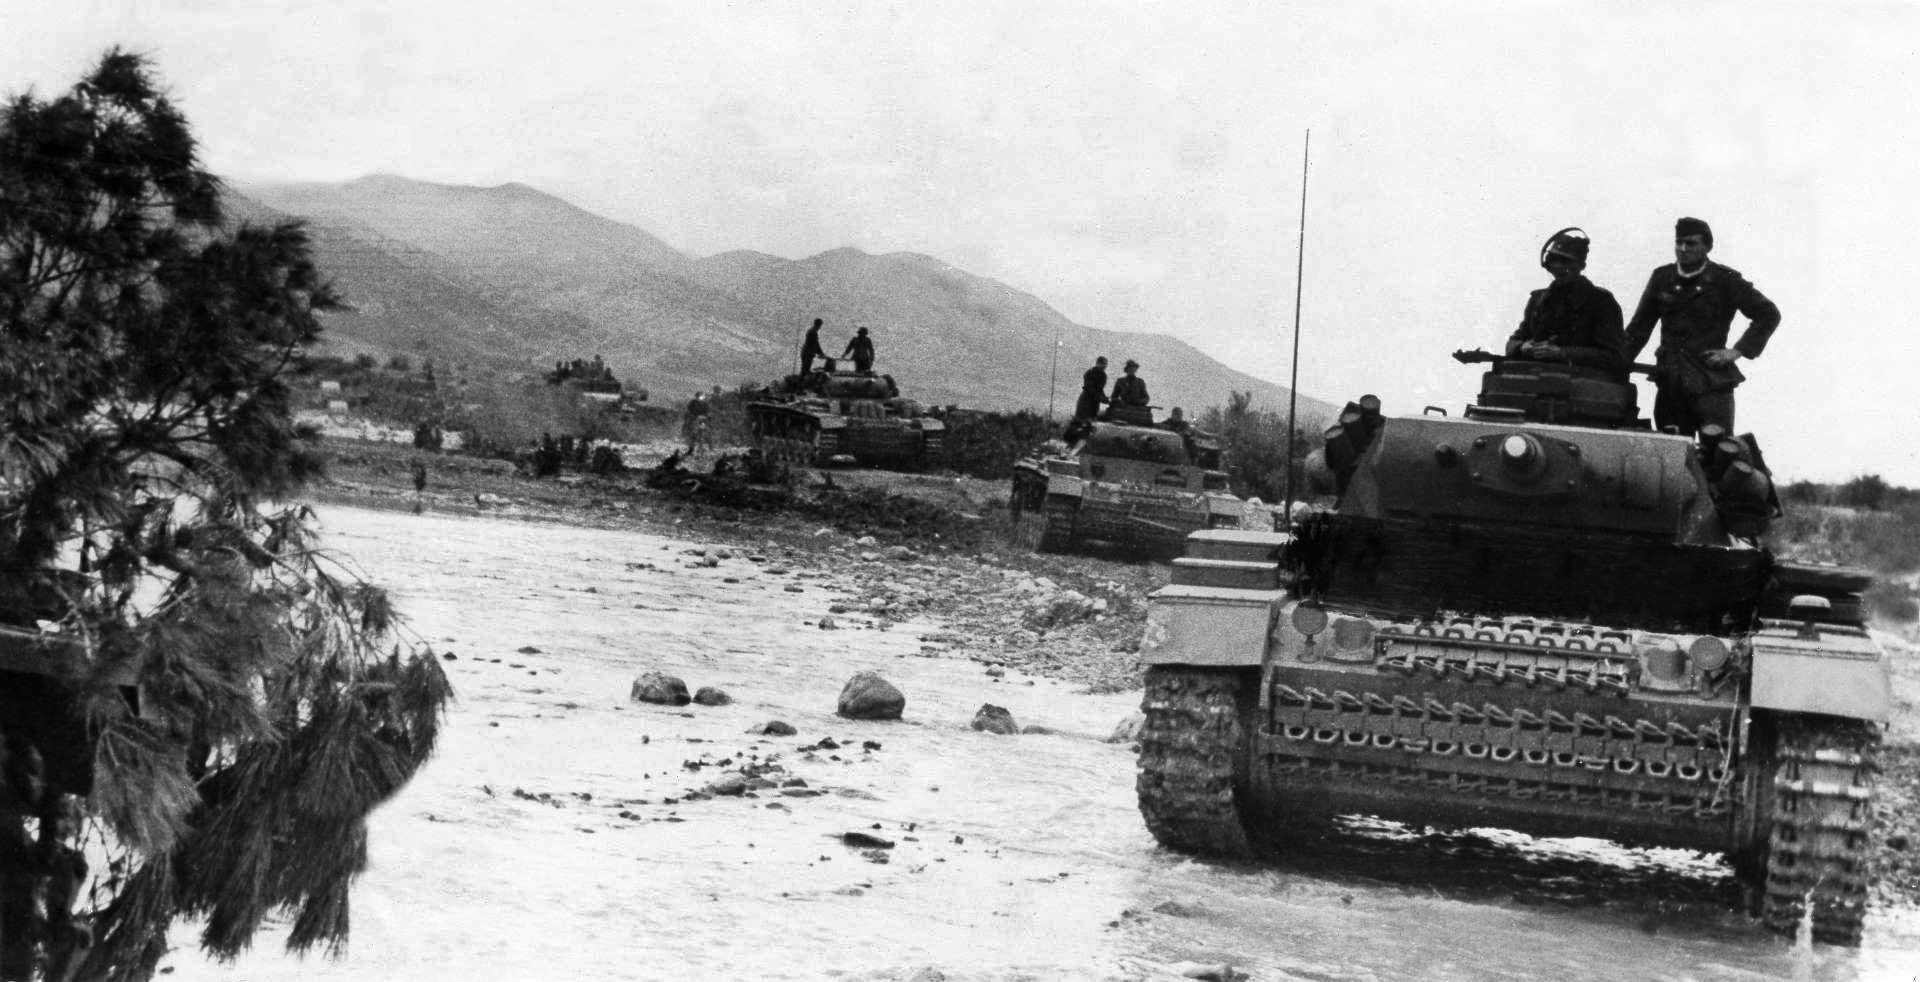 Panzer III medium tanks at Kasserine Pass, Tunisia, Feb 1943.